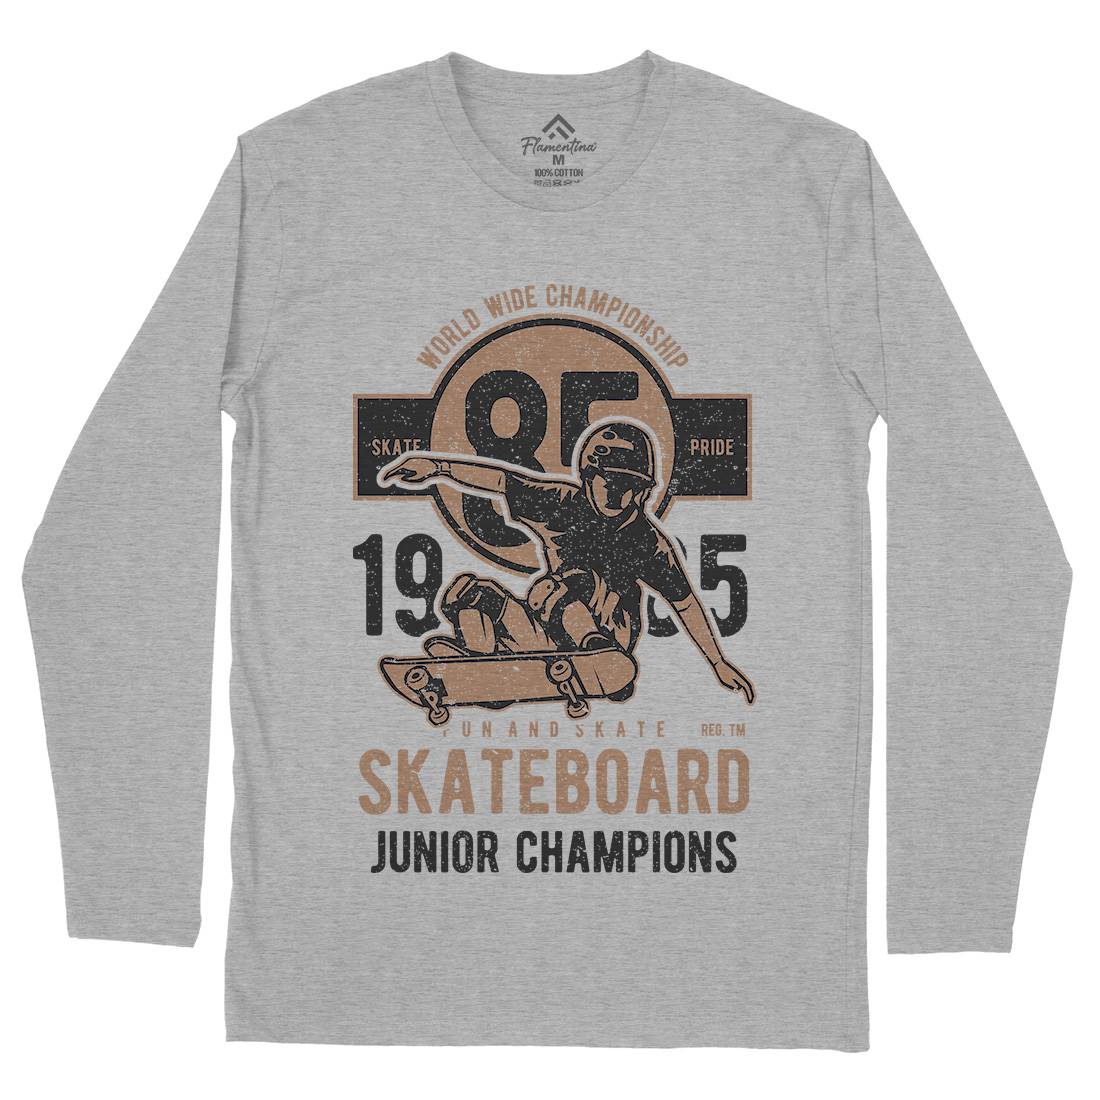 Skateboard Junior Champions Mens Long Sleeve T-Shirt Skate A755